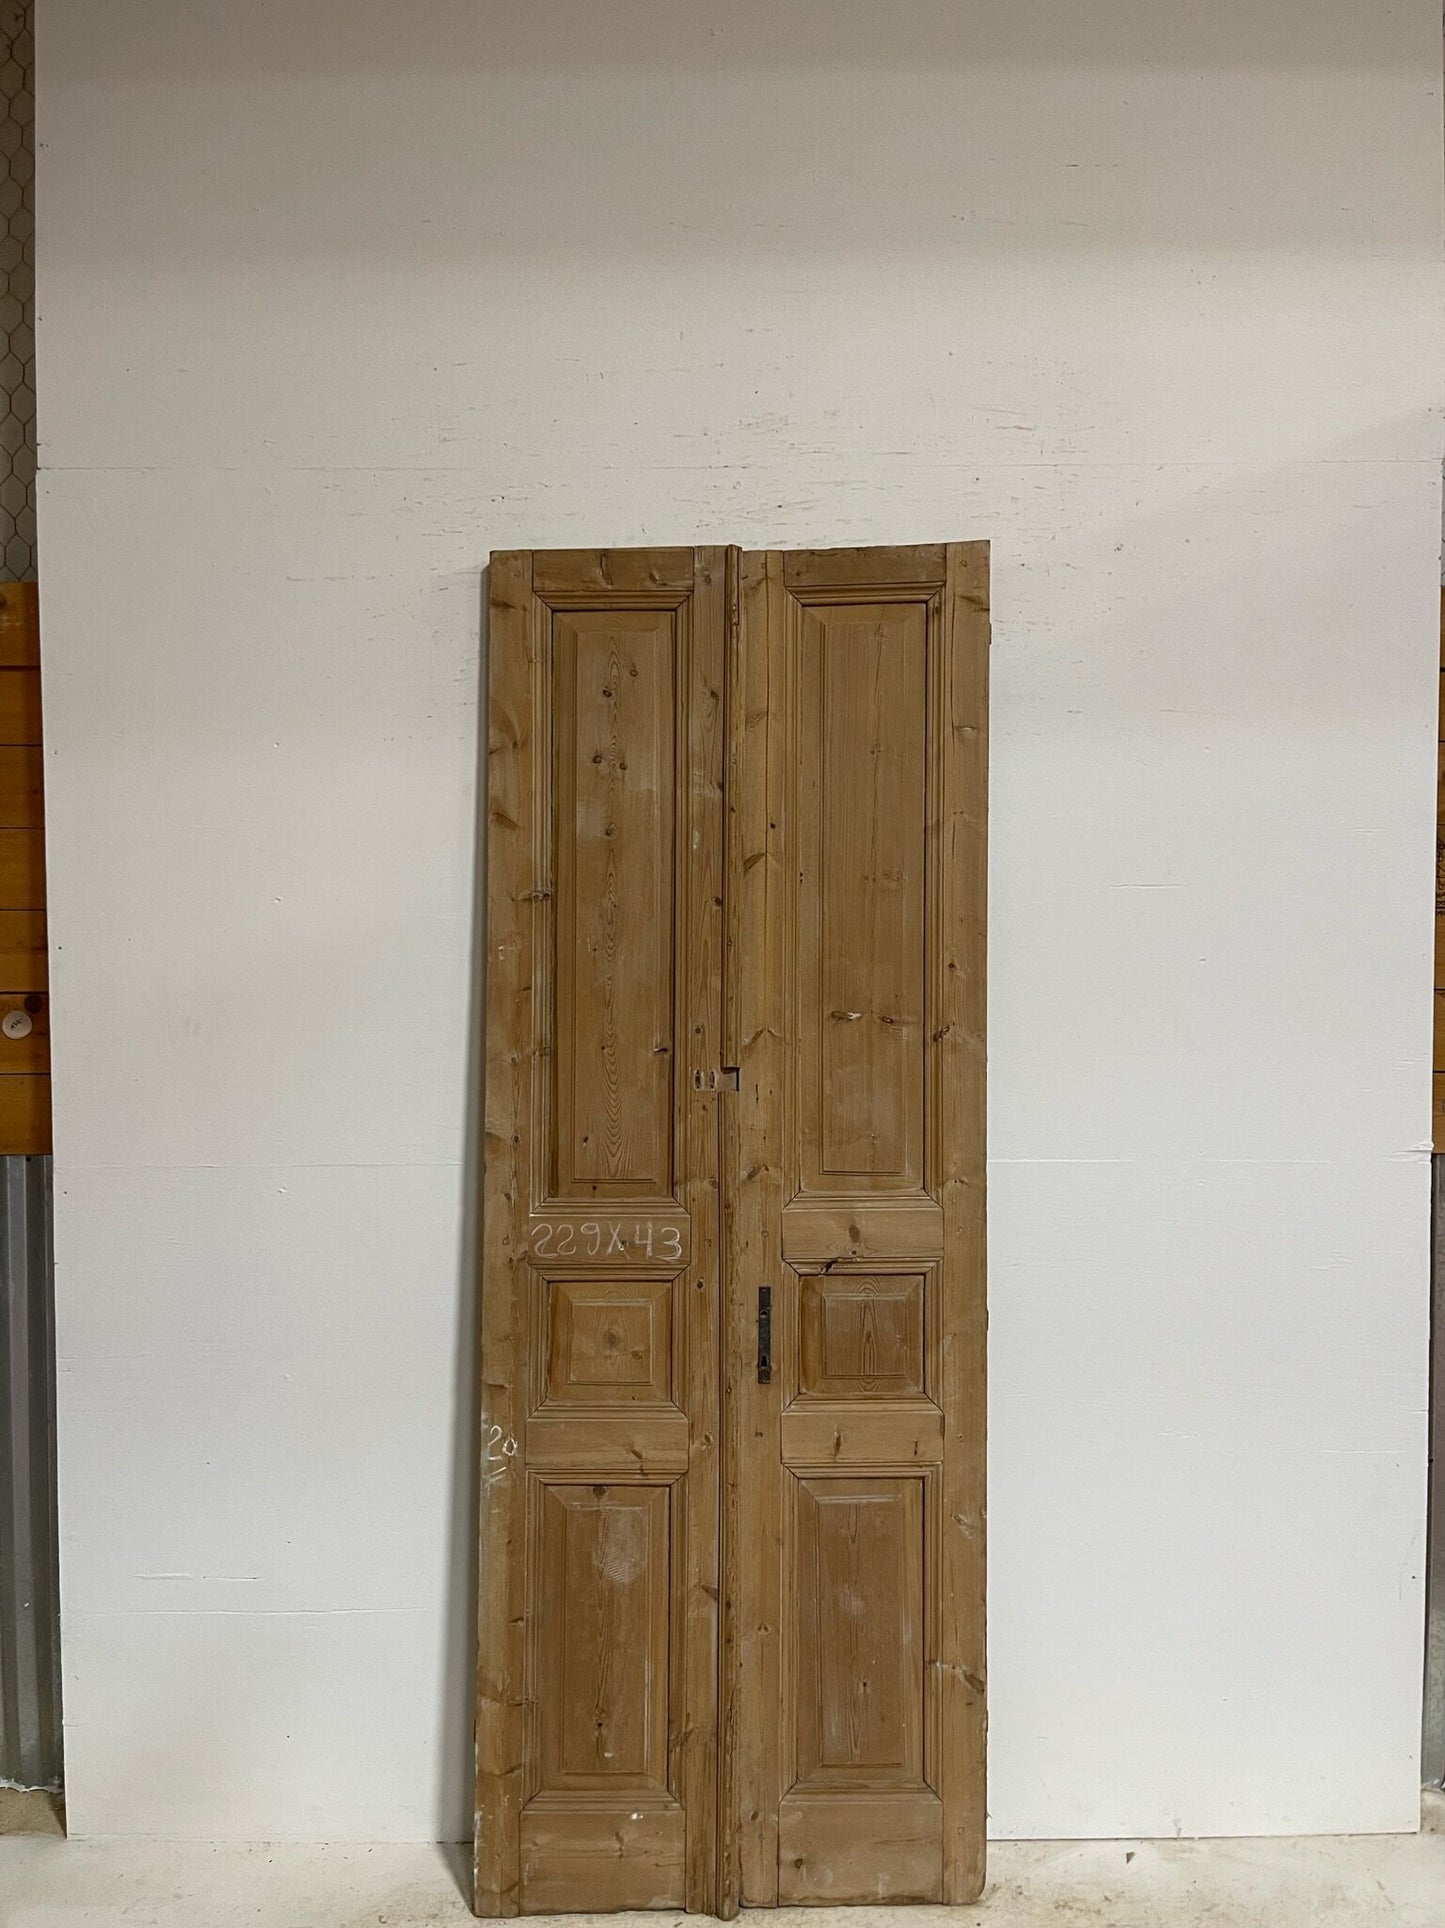 Antique French doors (90X33.75) G0028